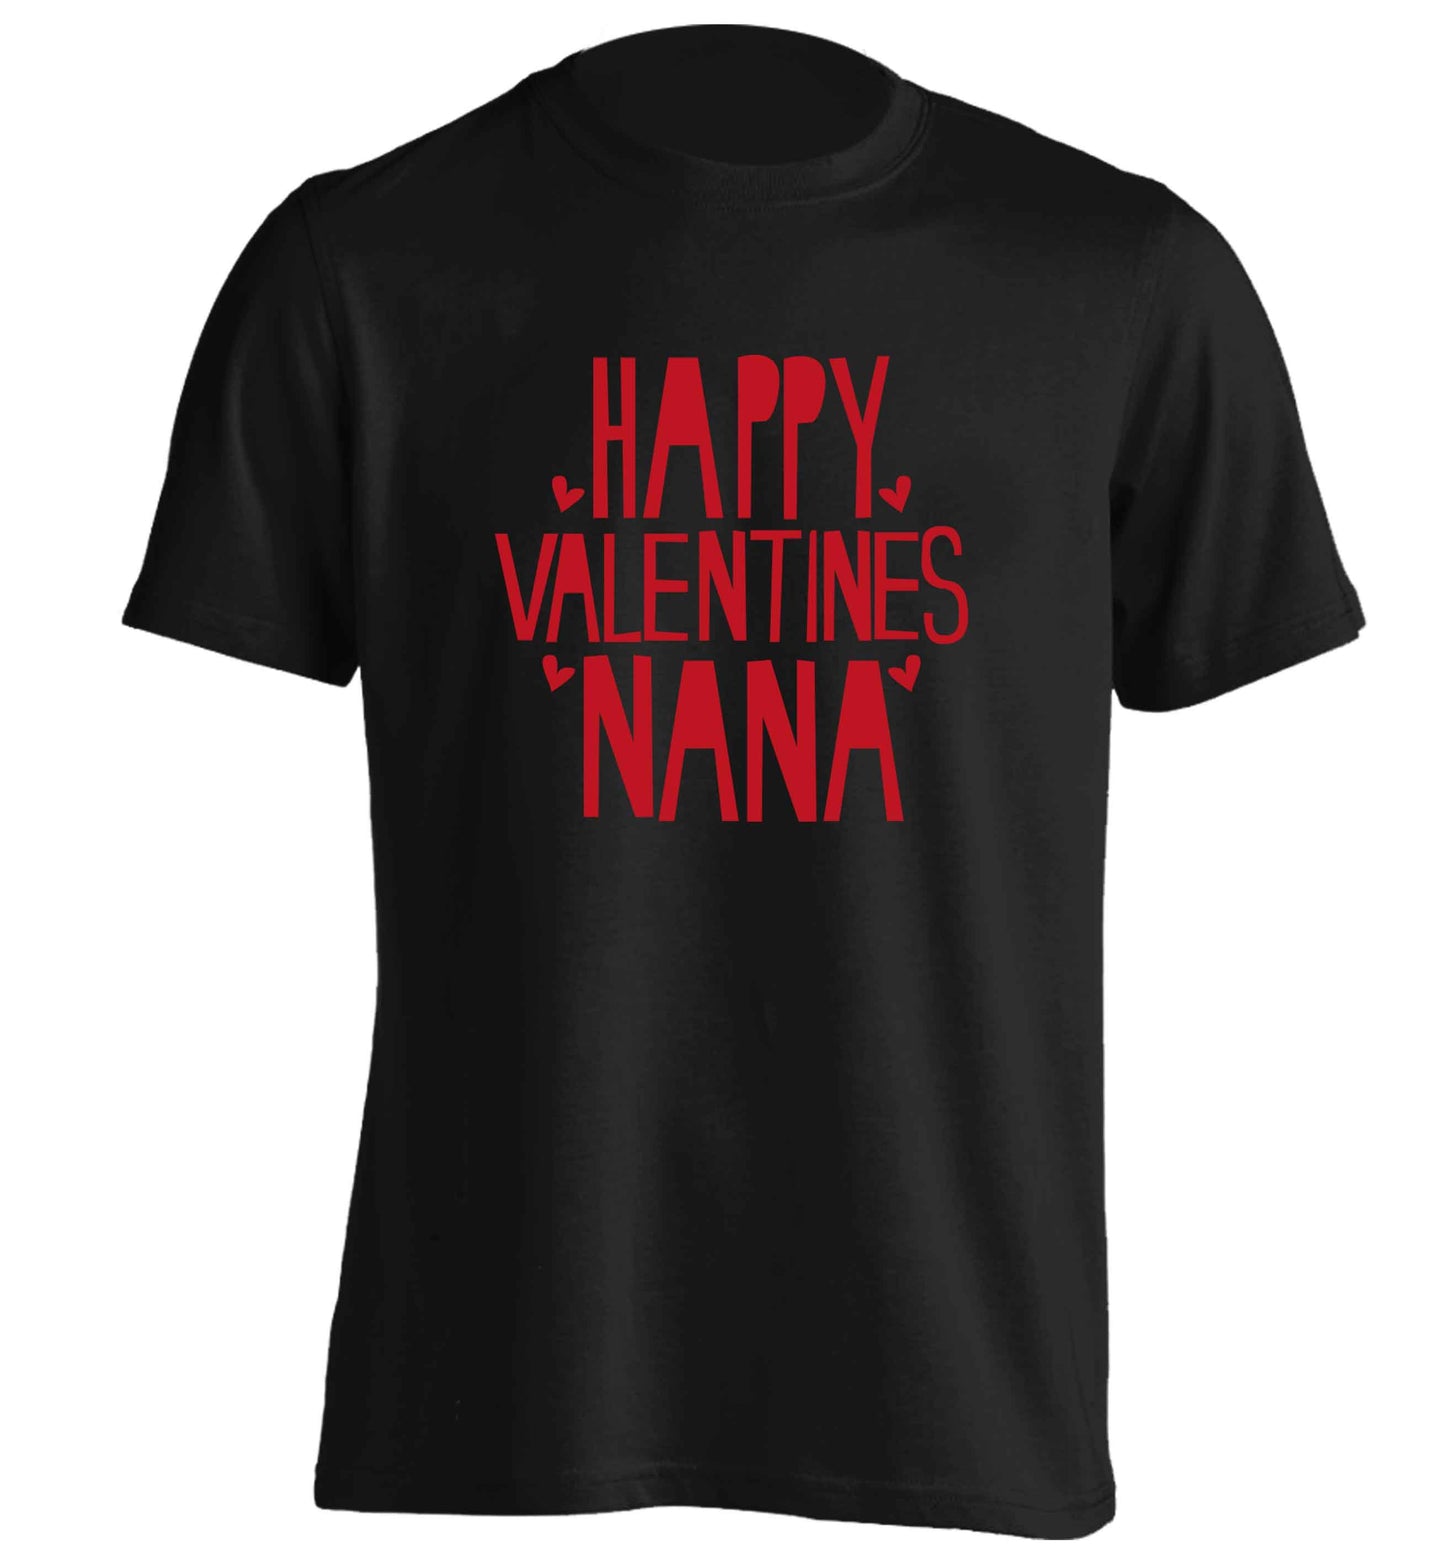 Happy valentines nana adults unisex black Tshirt 2XL